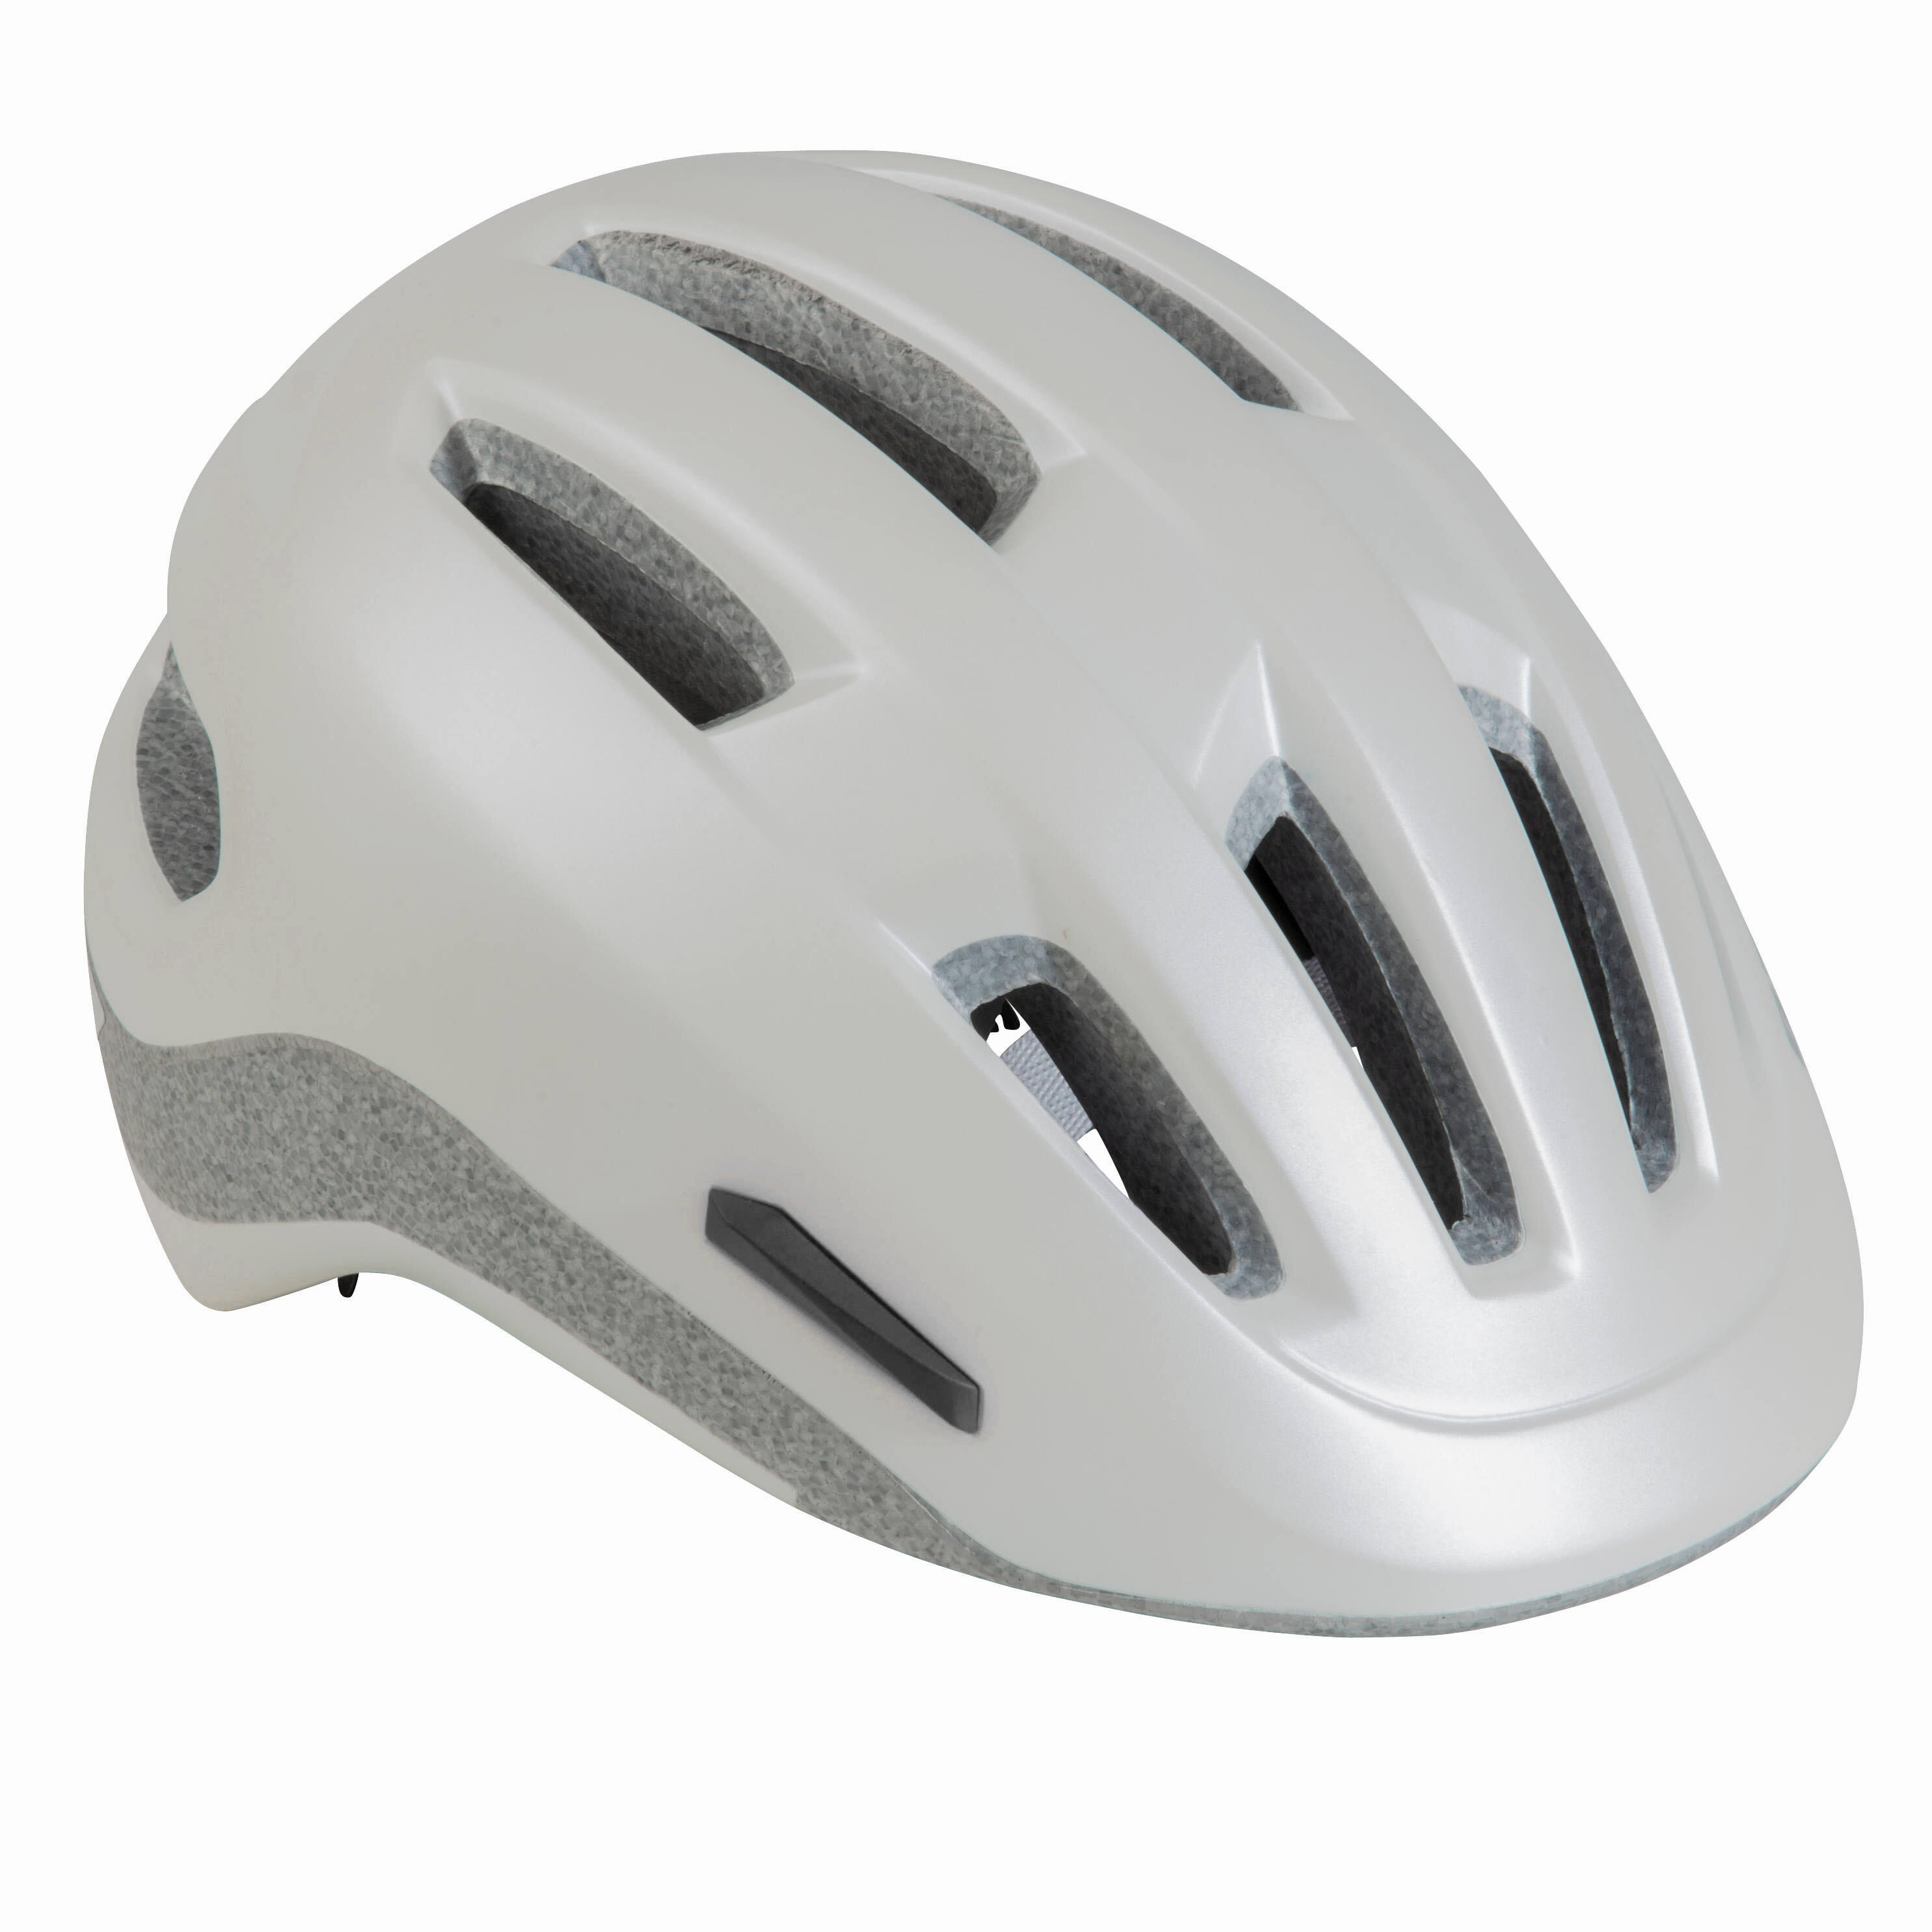 decathlon cycling helmet